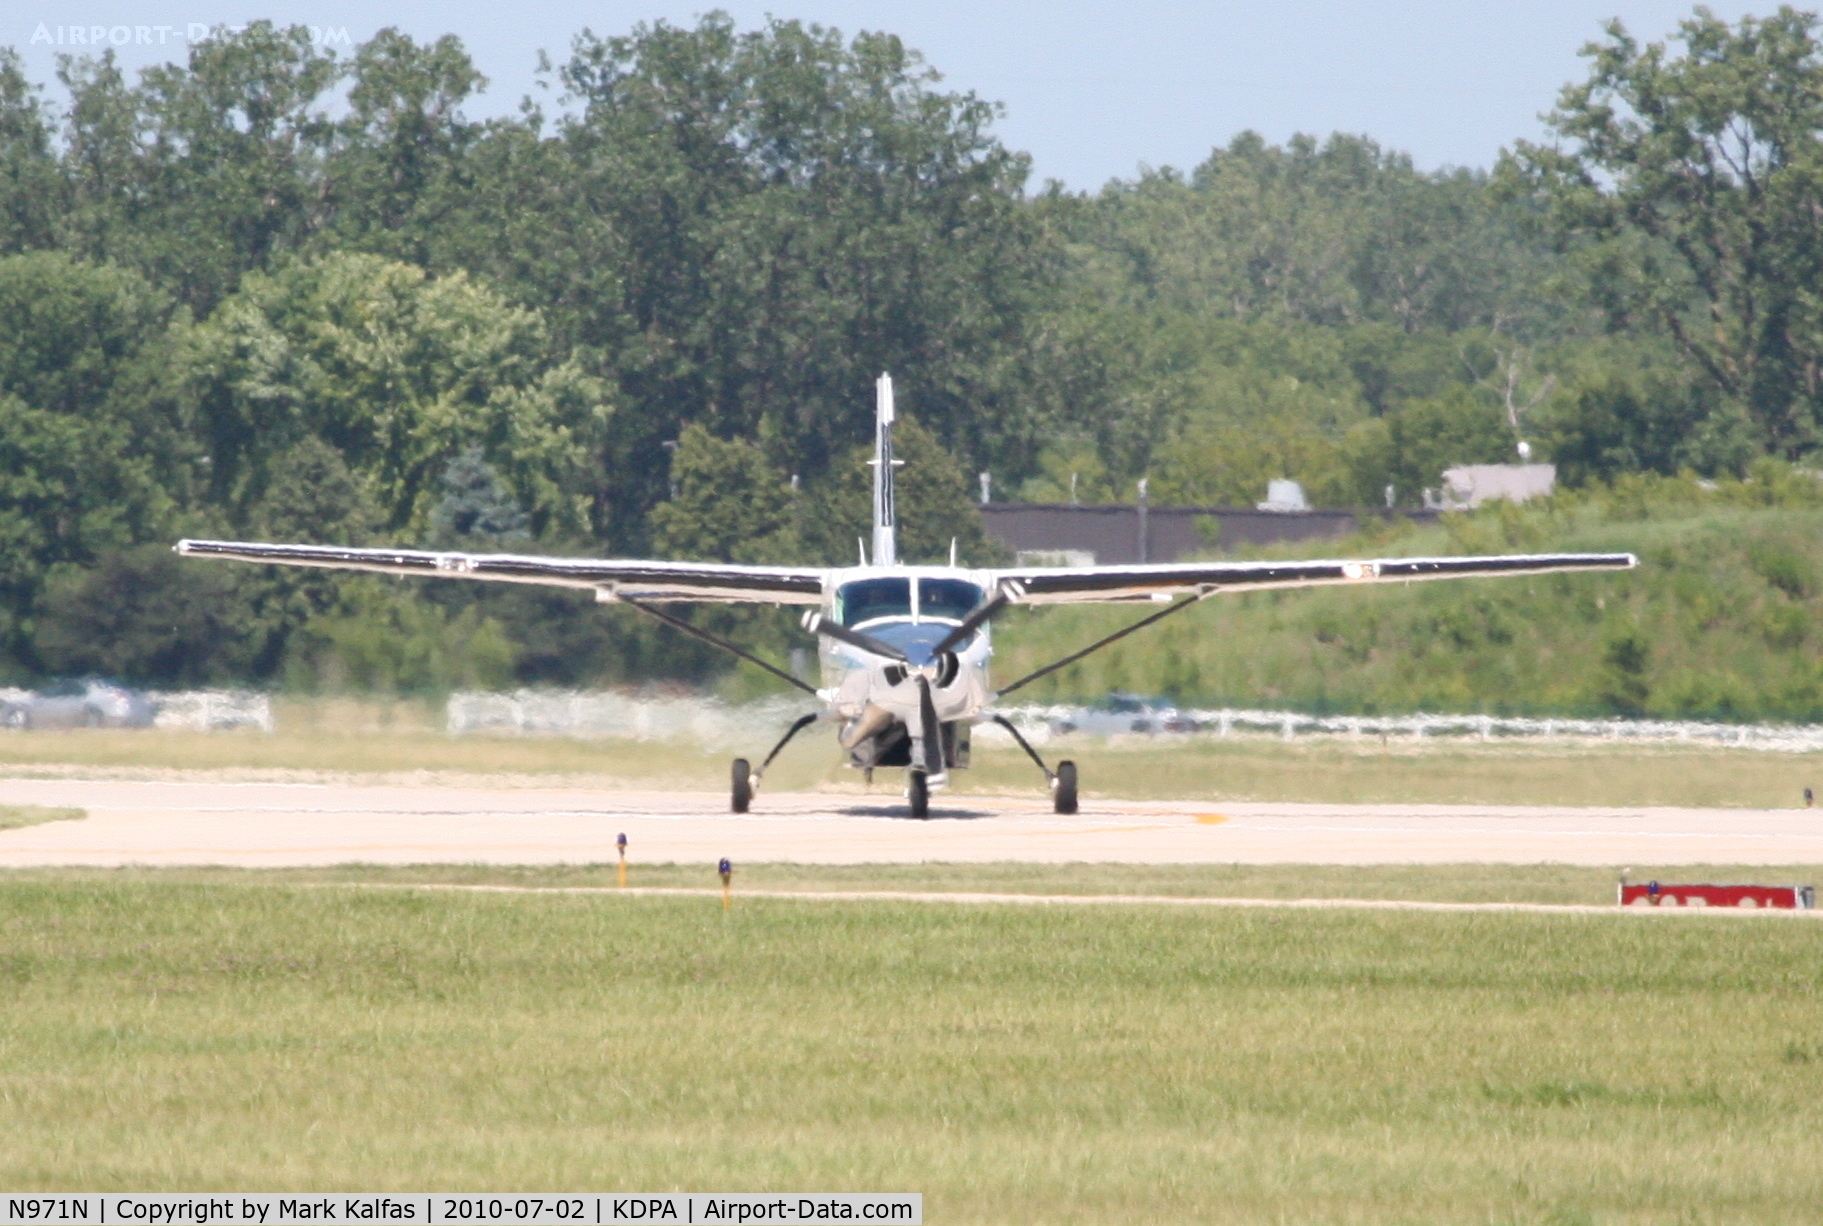 N971N, 2004 Cessna 208B Grand Caravan C/N 208B1071, WORLDWIDE AIRCRAFT LEASING CORP Cessna 208B Grand Carivan, N971N off 20R at Whiskey 7 KDPA while practicing full stop landings.